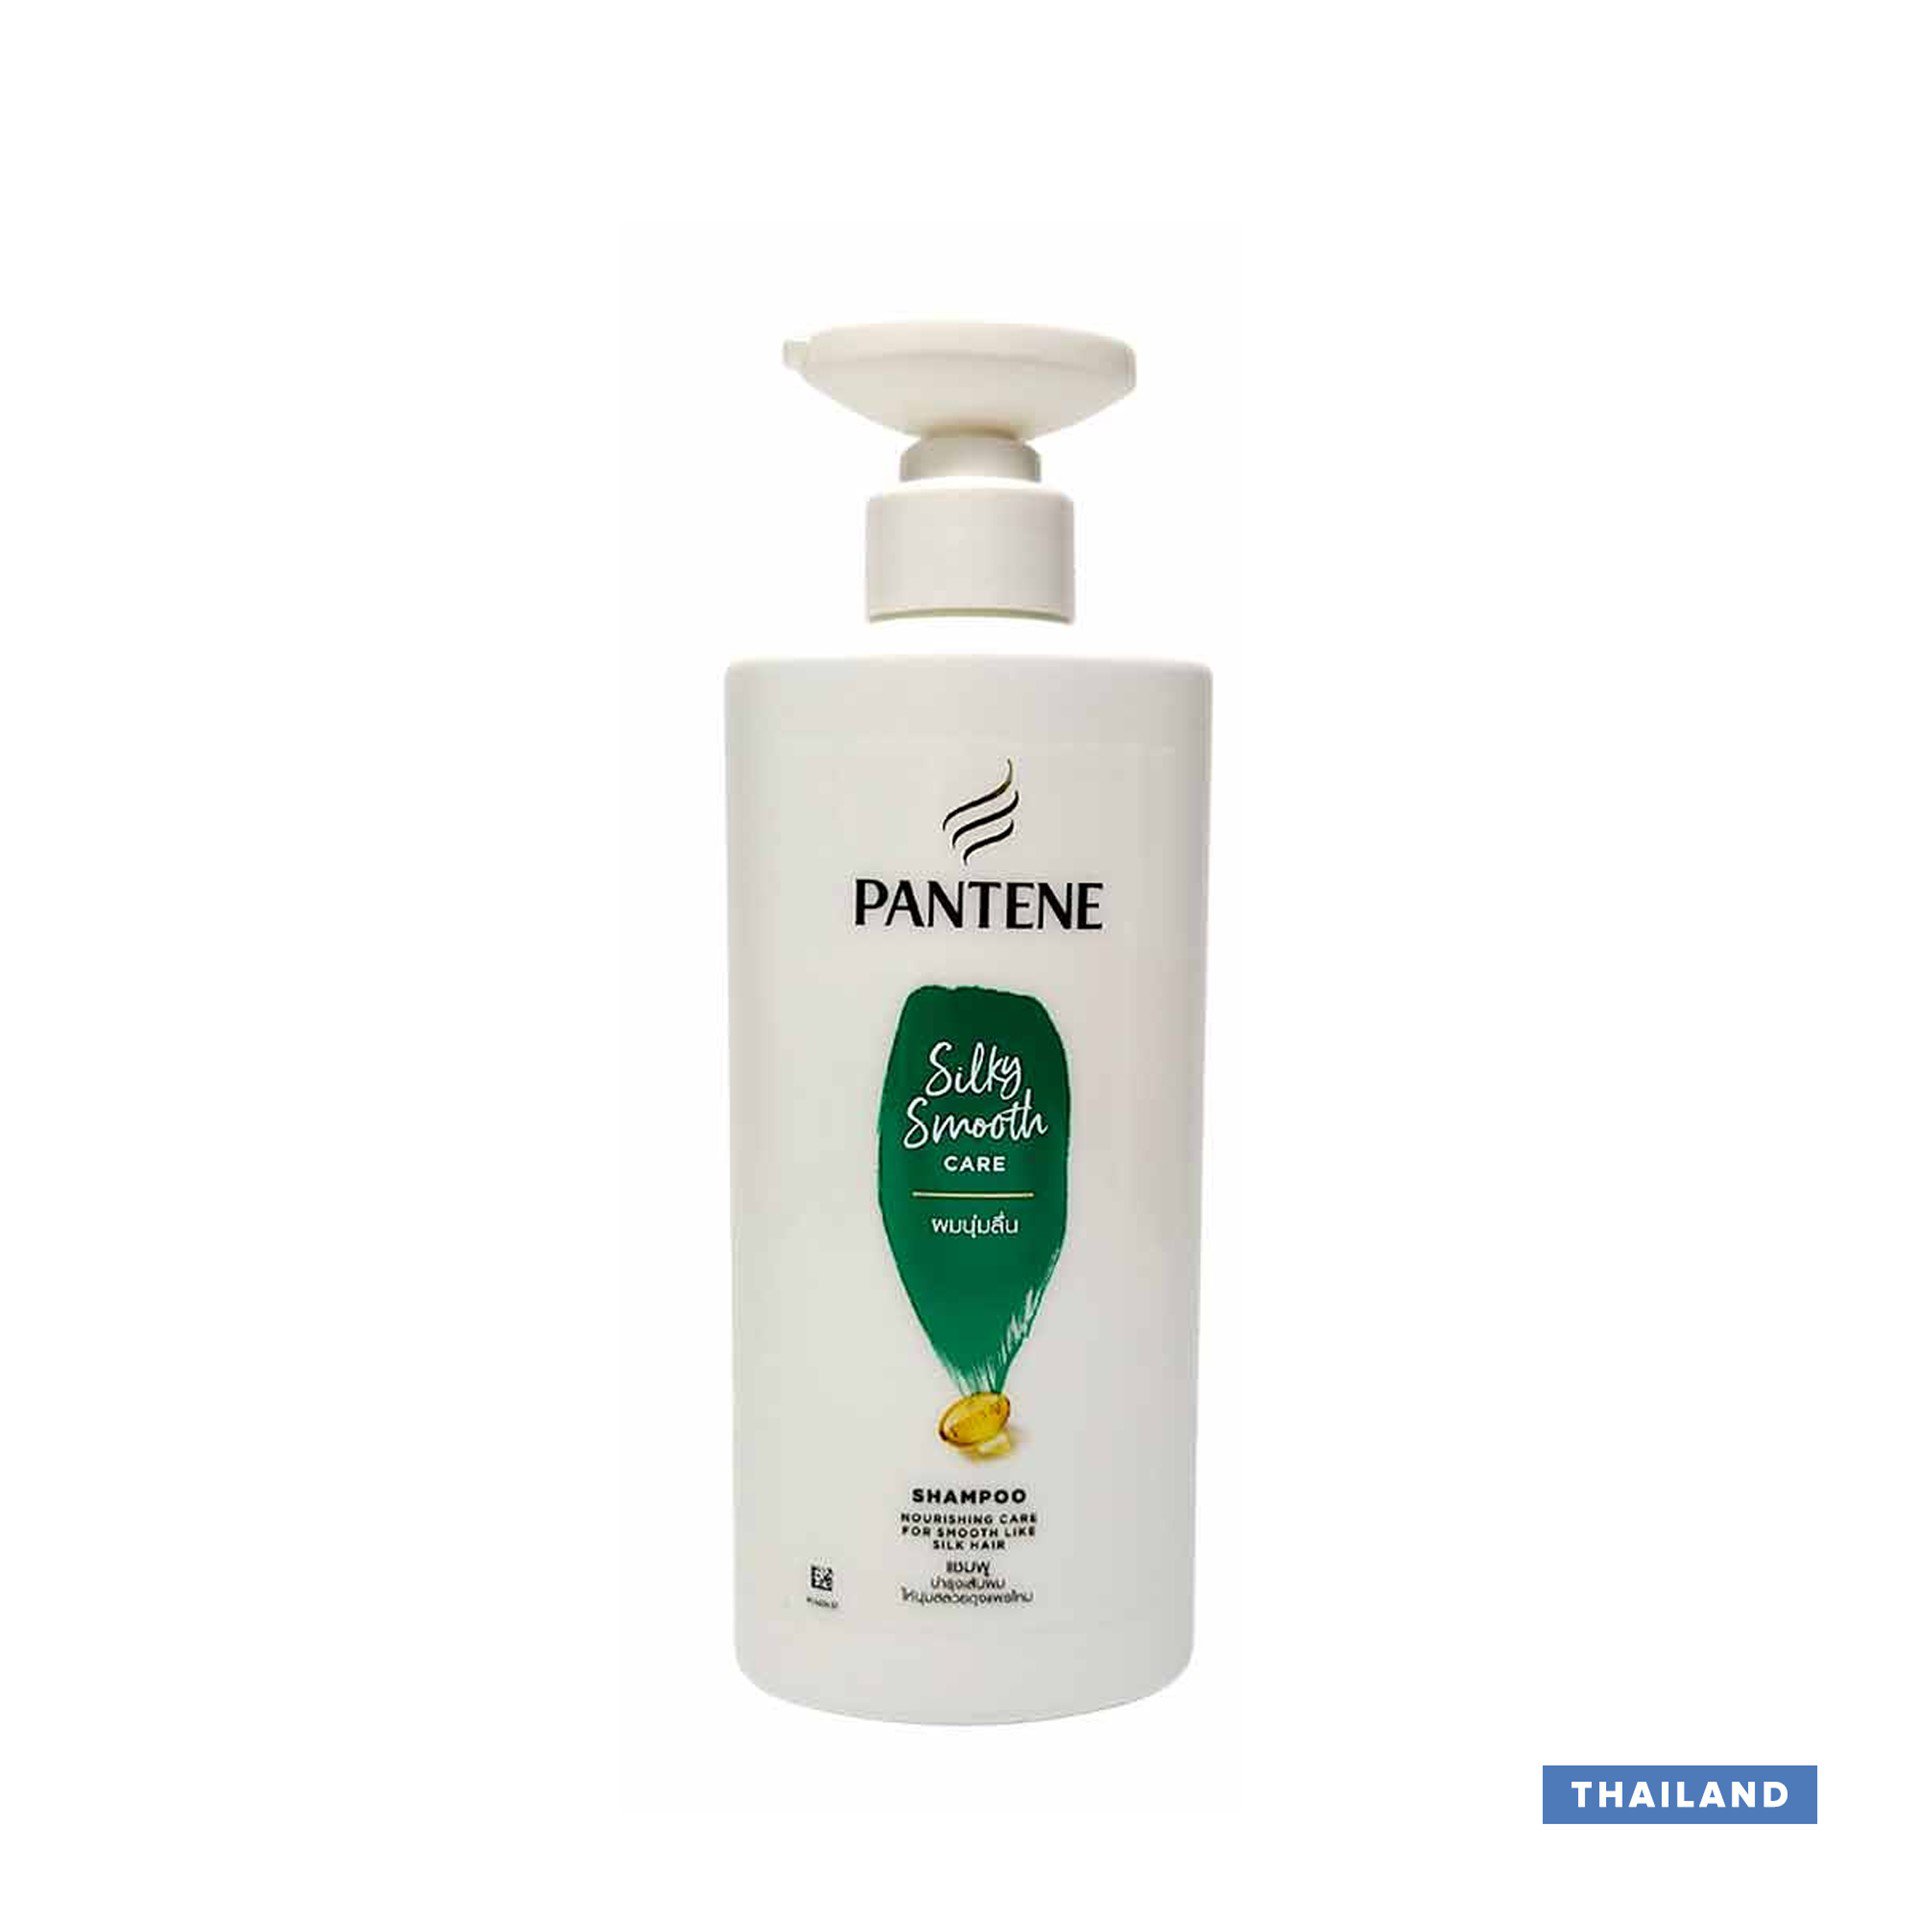 Pantene Silky Smooth Care Shampoo - 410ml (Thailand)